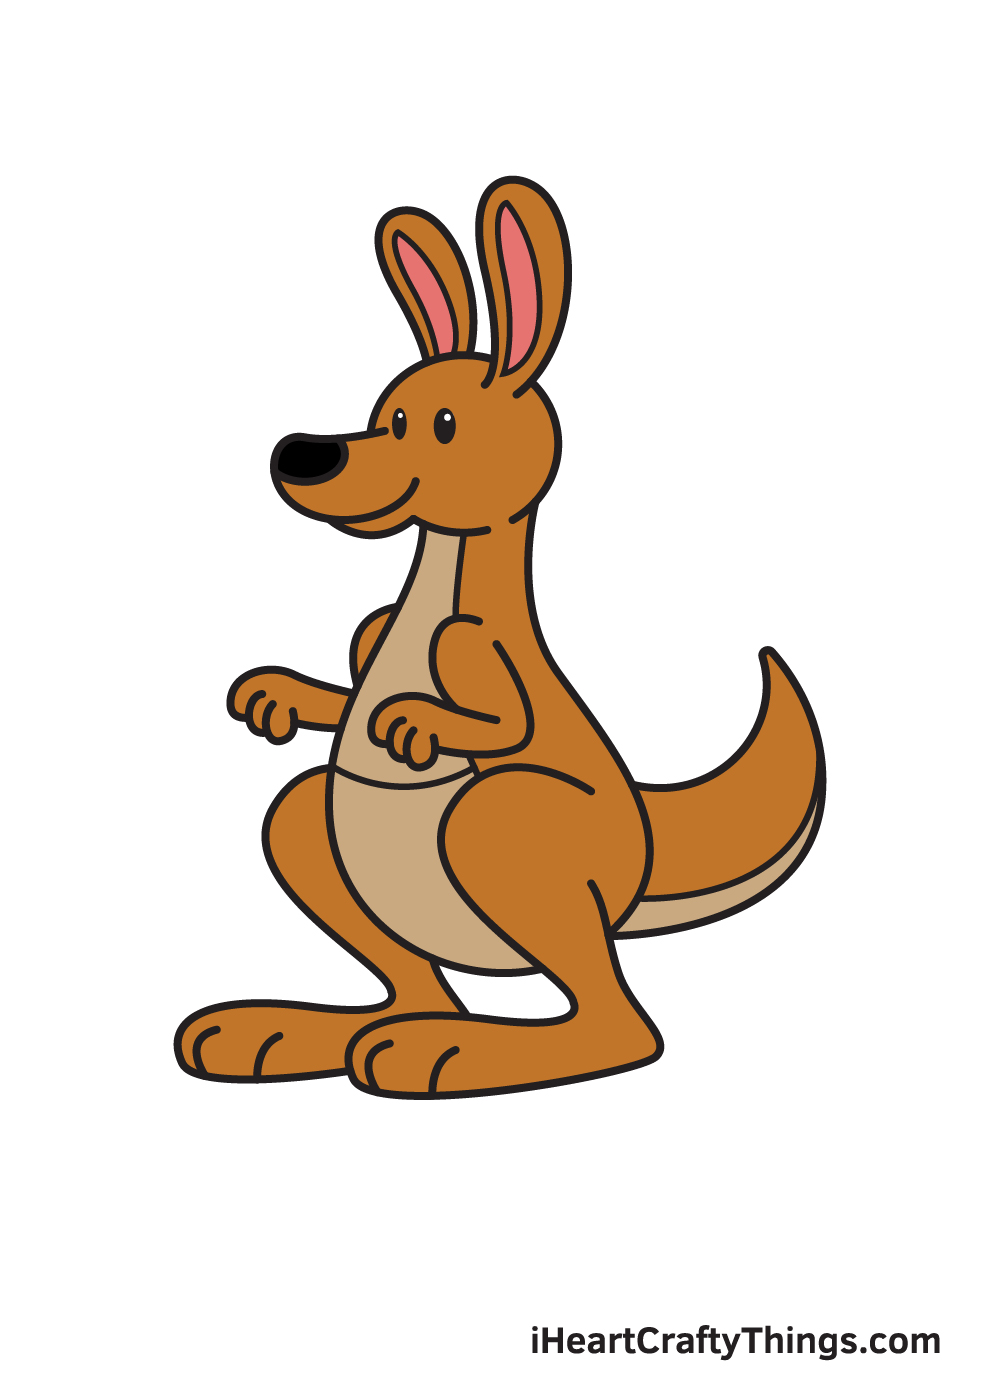 Kangaroo Drawing - How To Draw A Kangaroo Step By Step